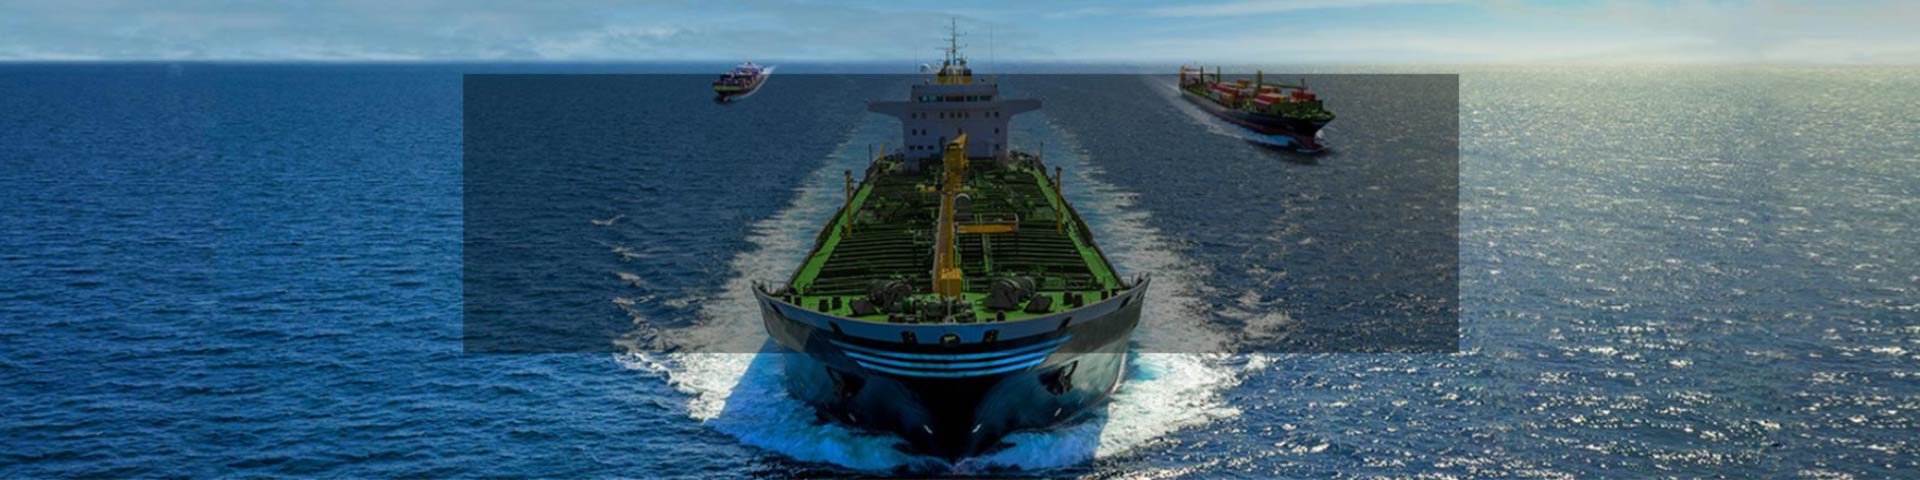 Navire sur l'océan - carburant méthanol